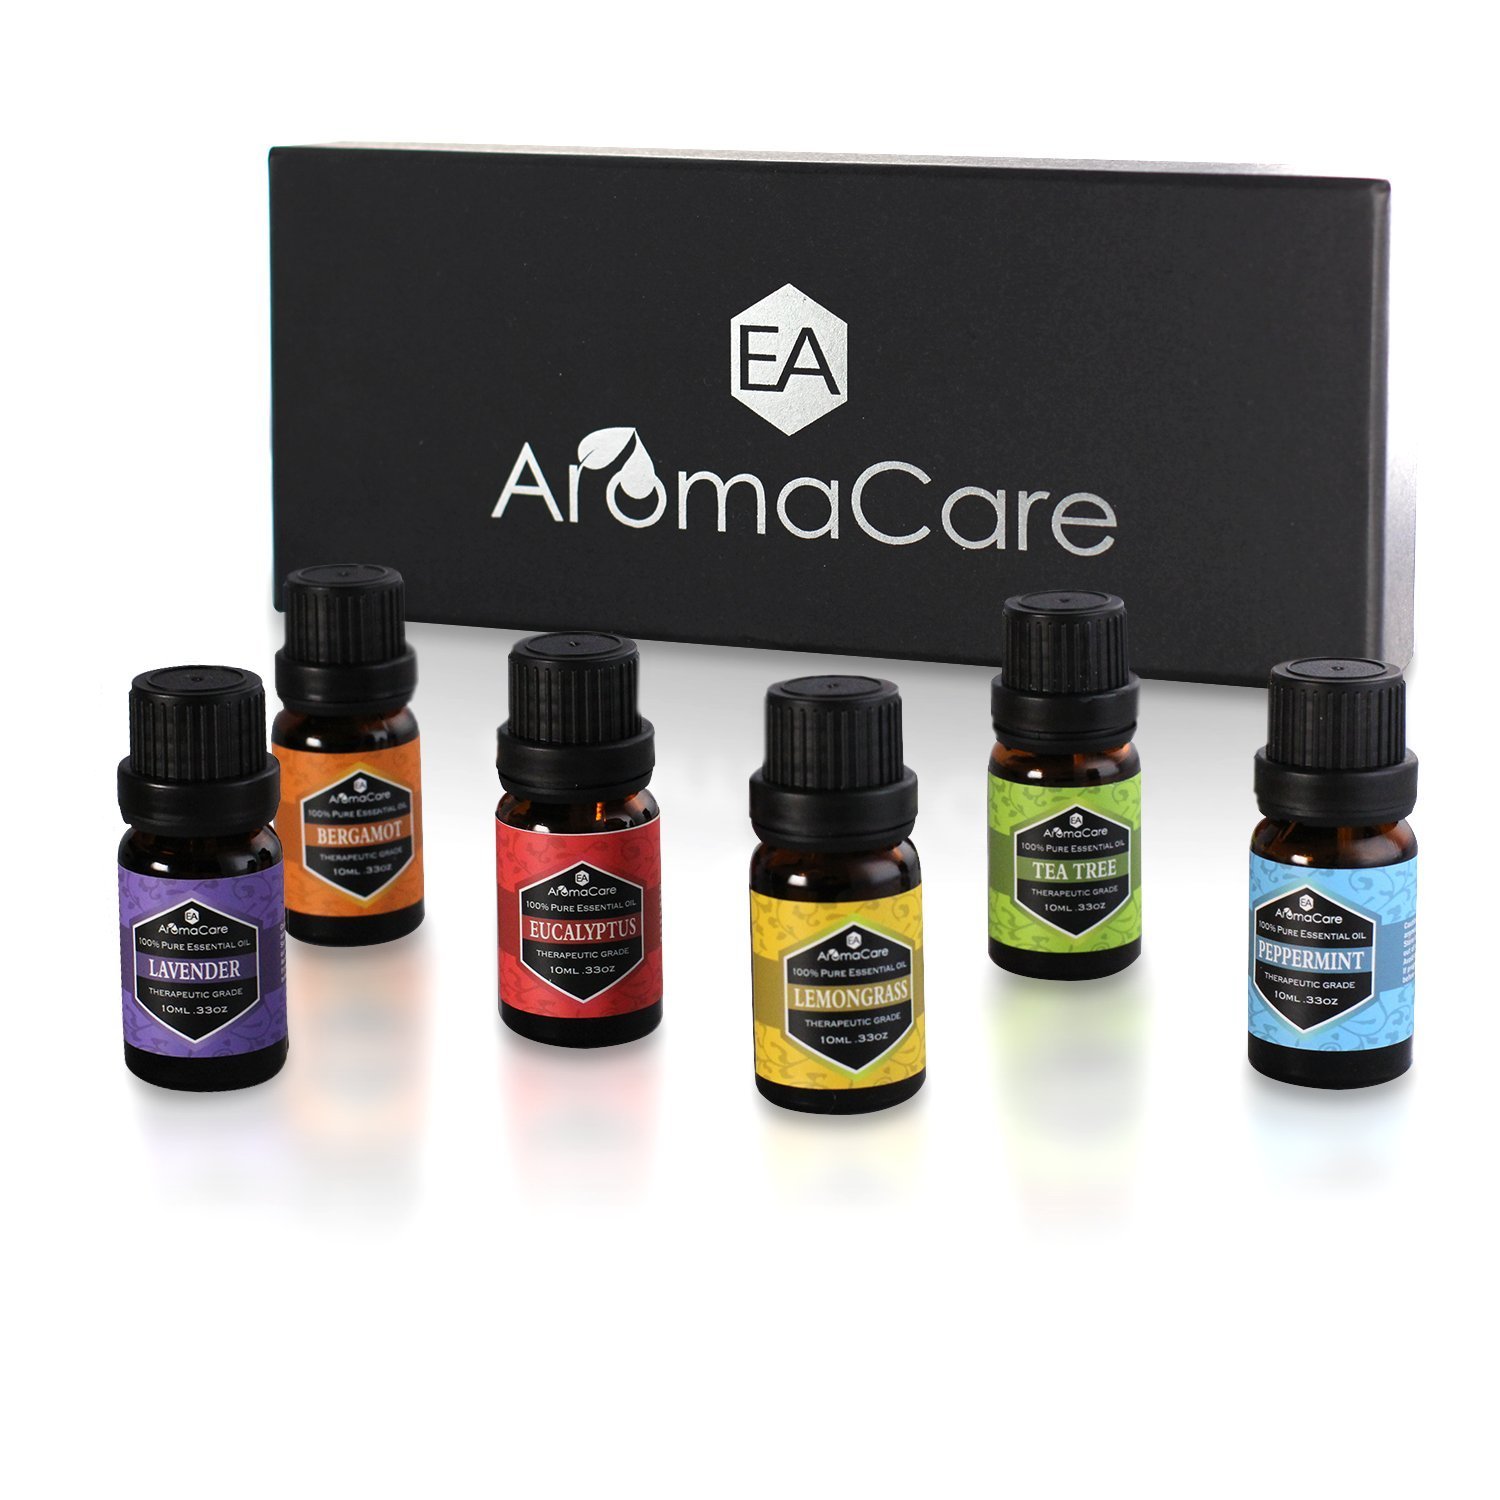 EA AromaCare Aromatherapy Essential Oils Gift Set